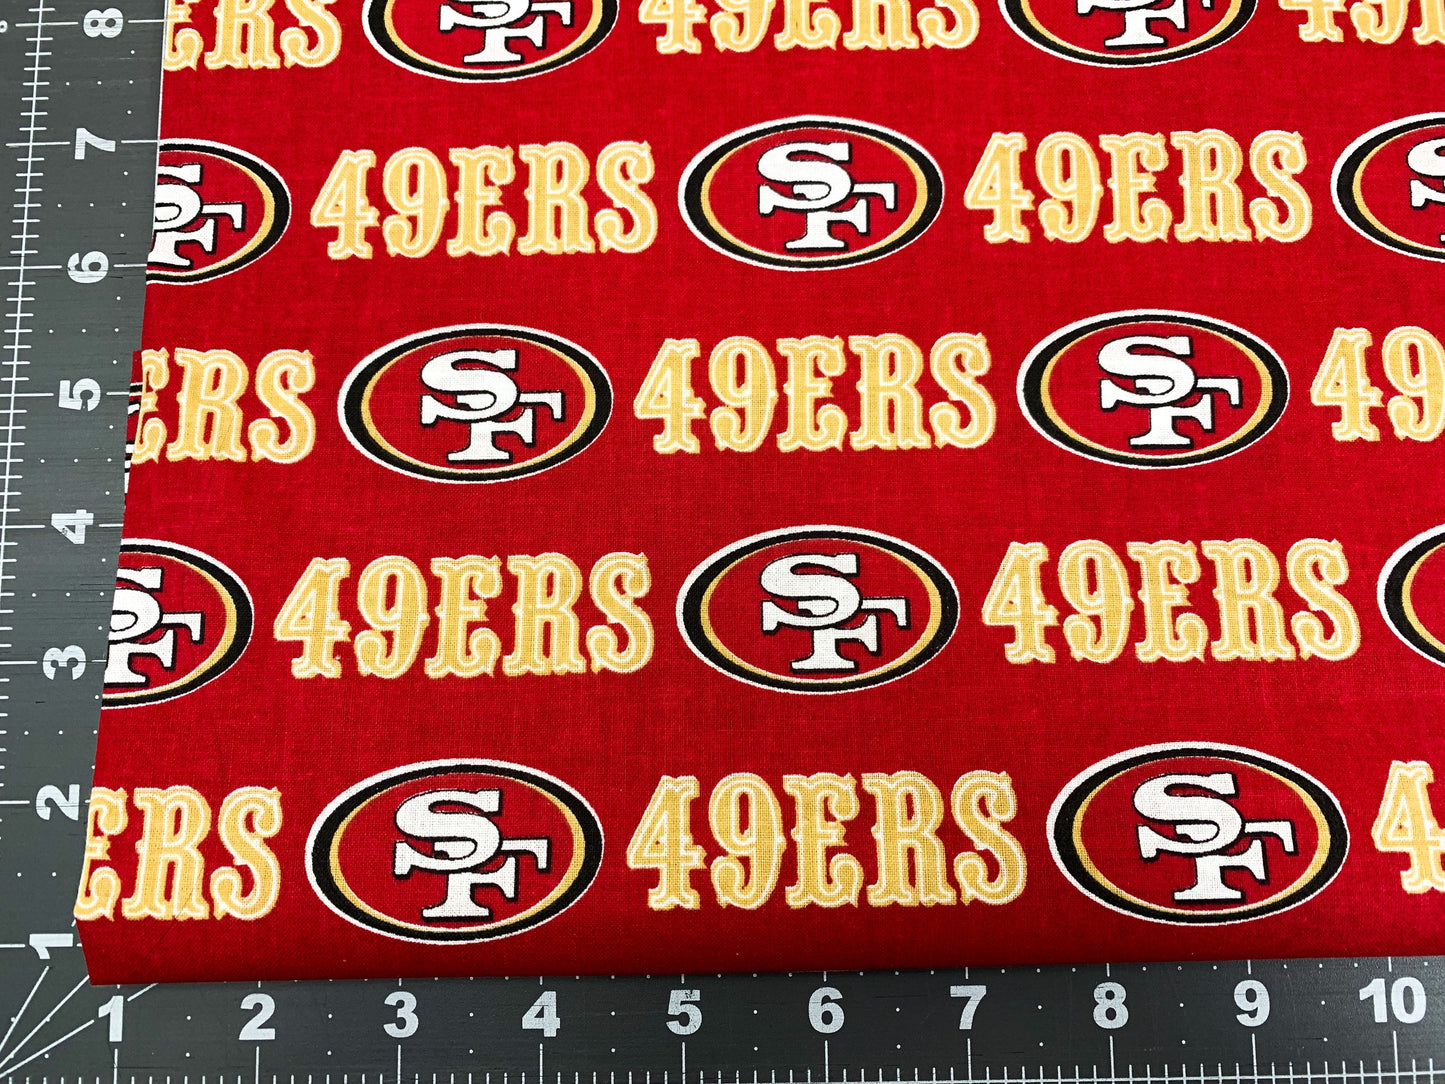 San Francisco 49ers fabric 70404D SF 49er NFL Cotton fabric